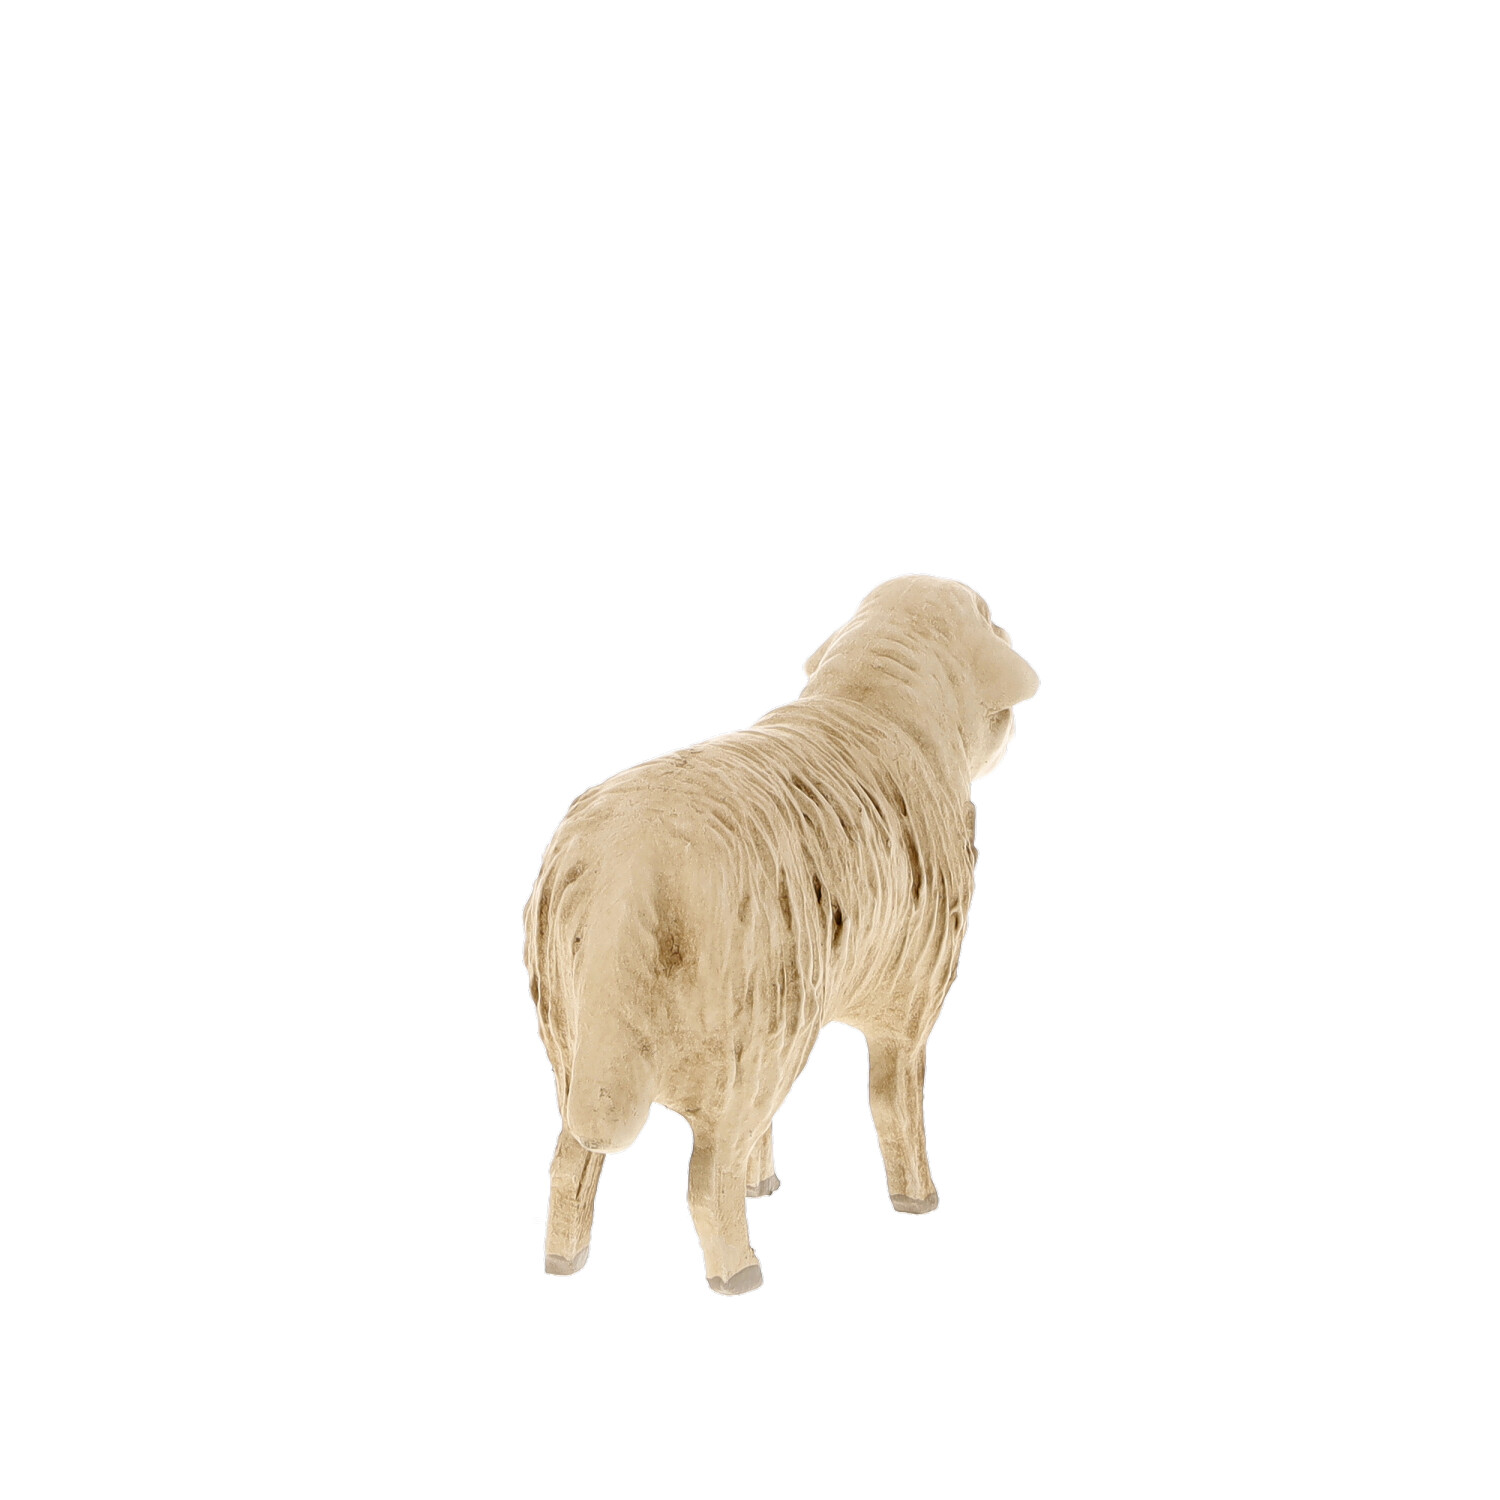 Schaf geradeaus blickend, zu 14cm Marolin Krippenfiguren - made in Germany